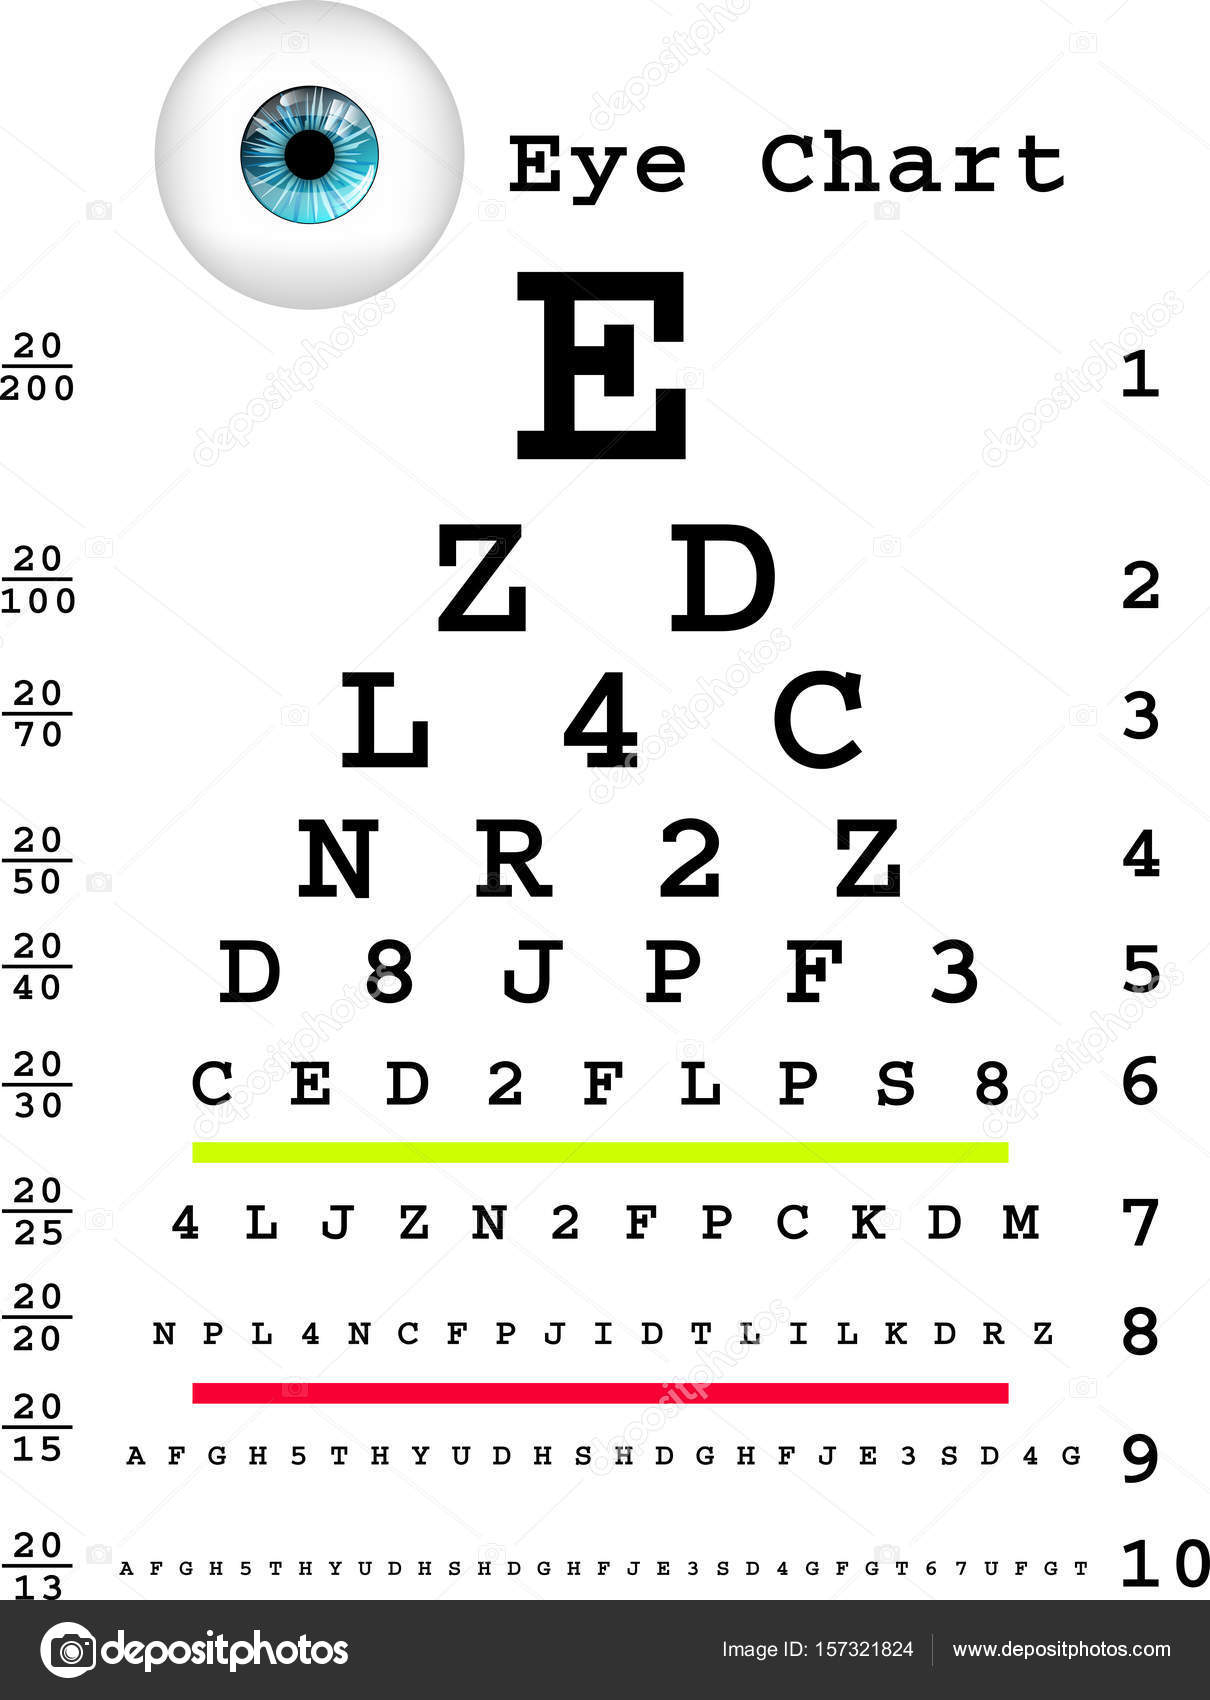 Dr Eye Chart